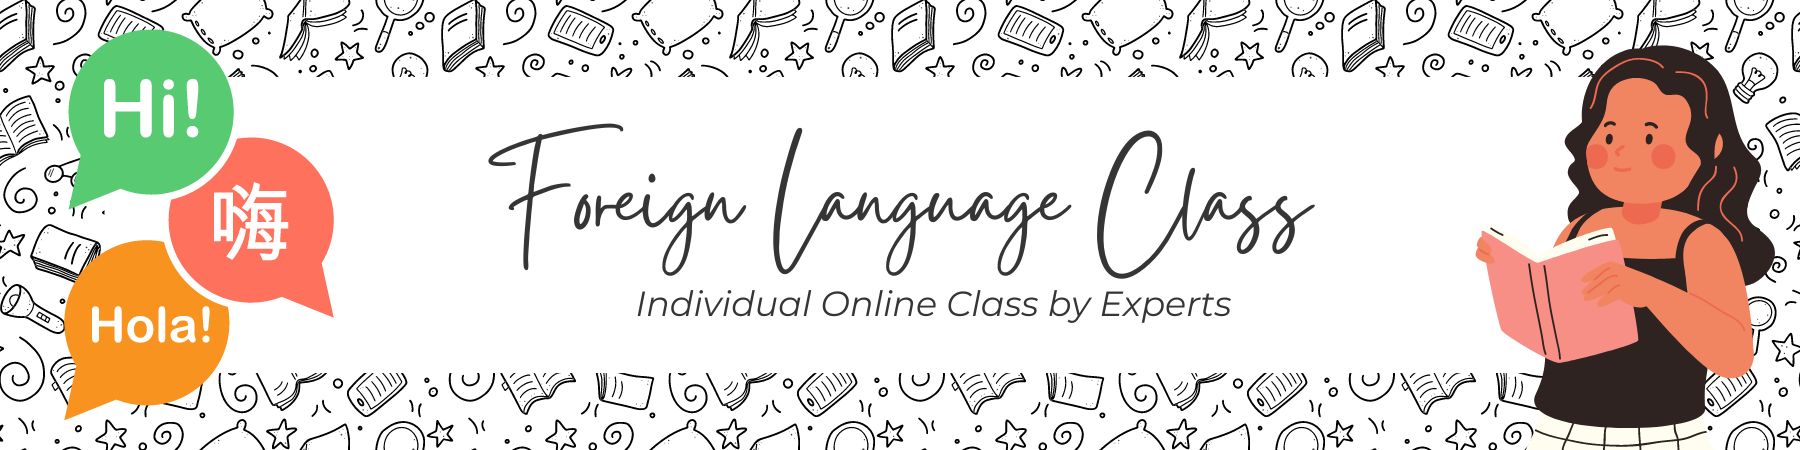 Online Language Class